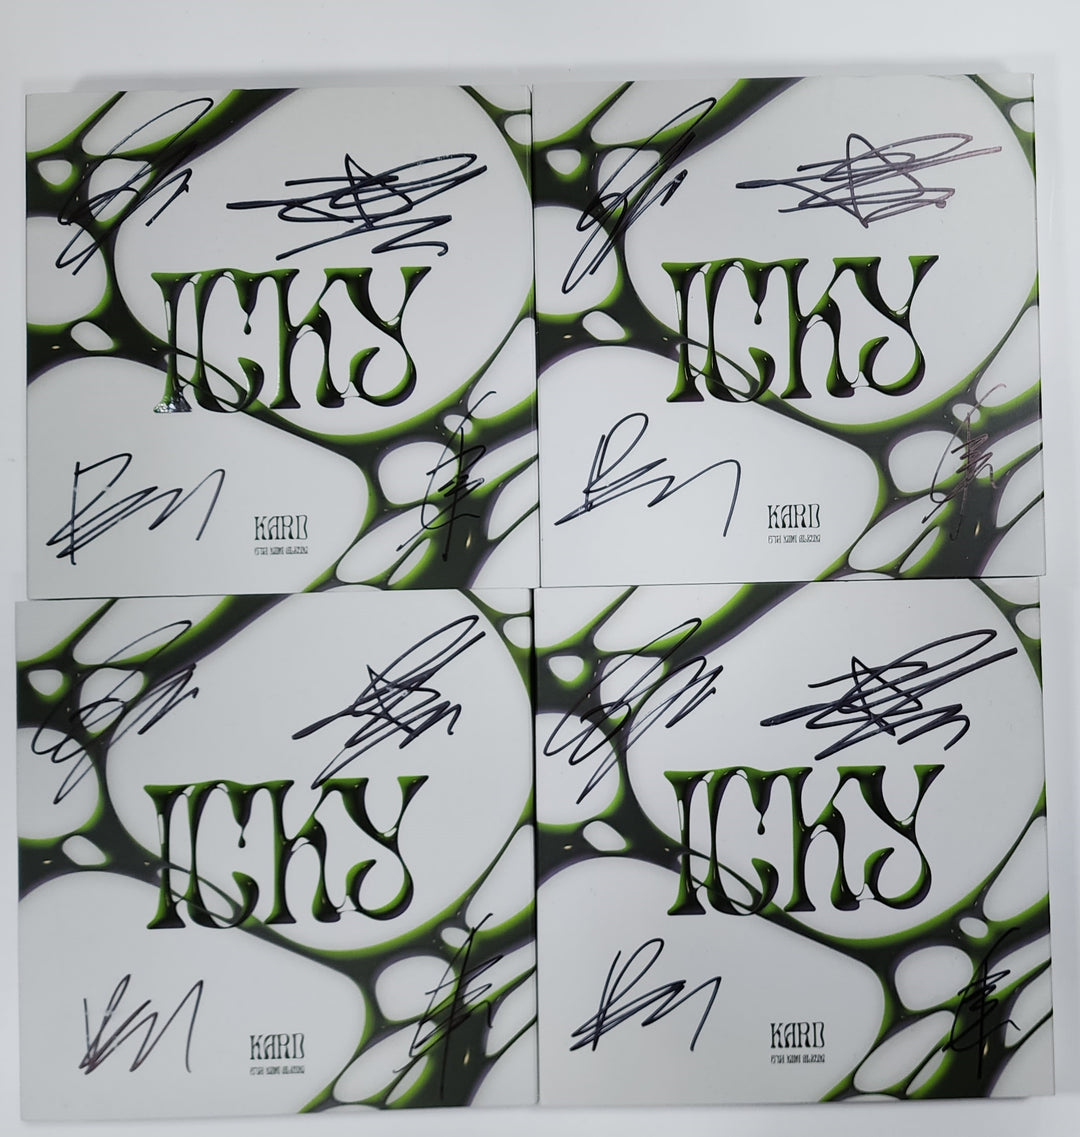 KARD "ICKY" - Hand Autographed(Signed) Promo Album